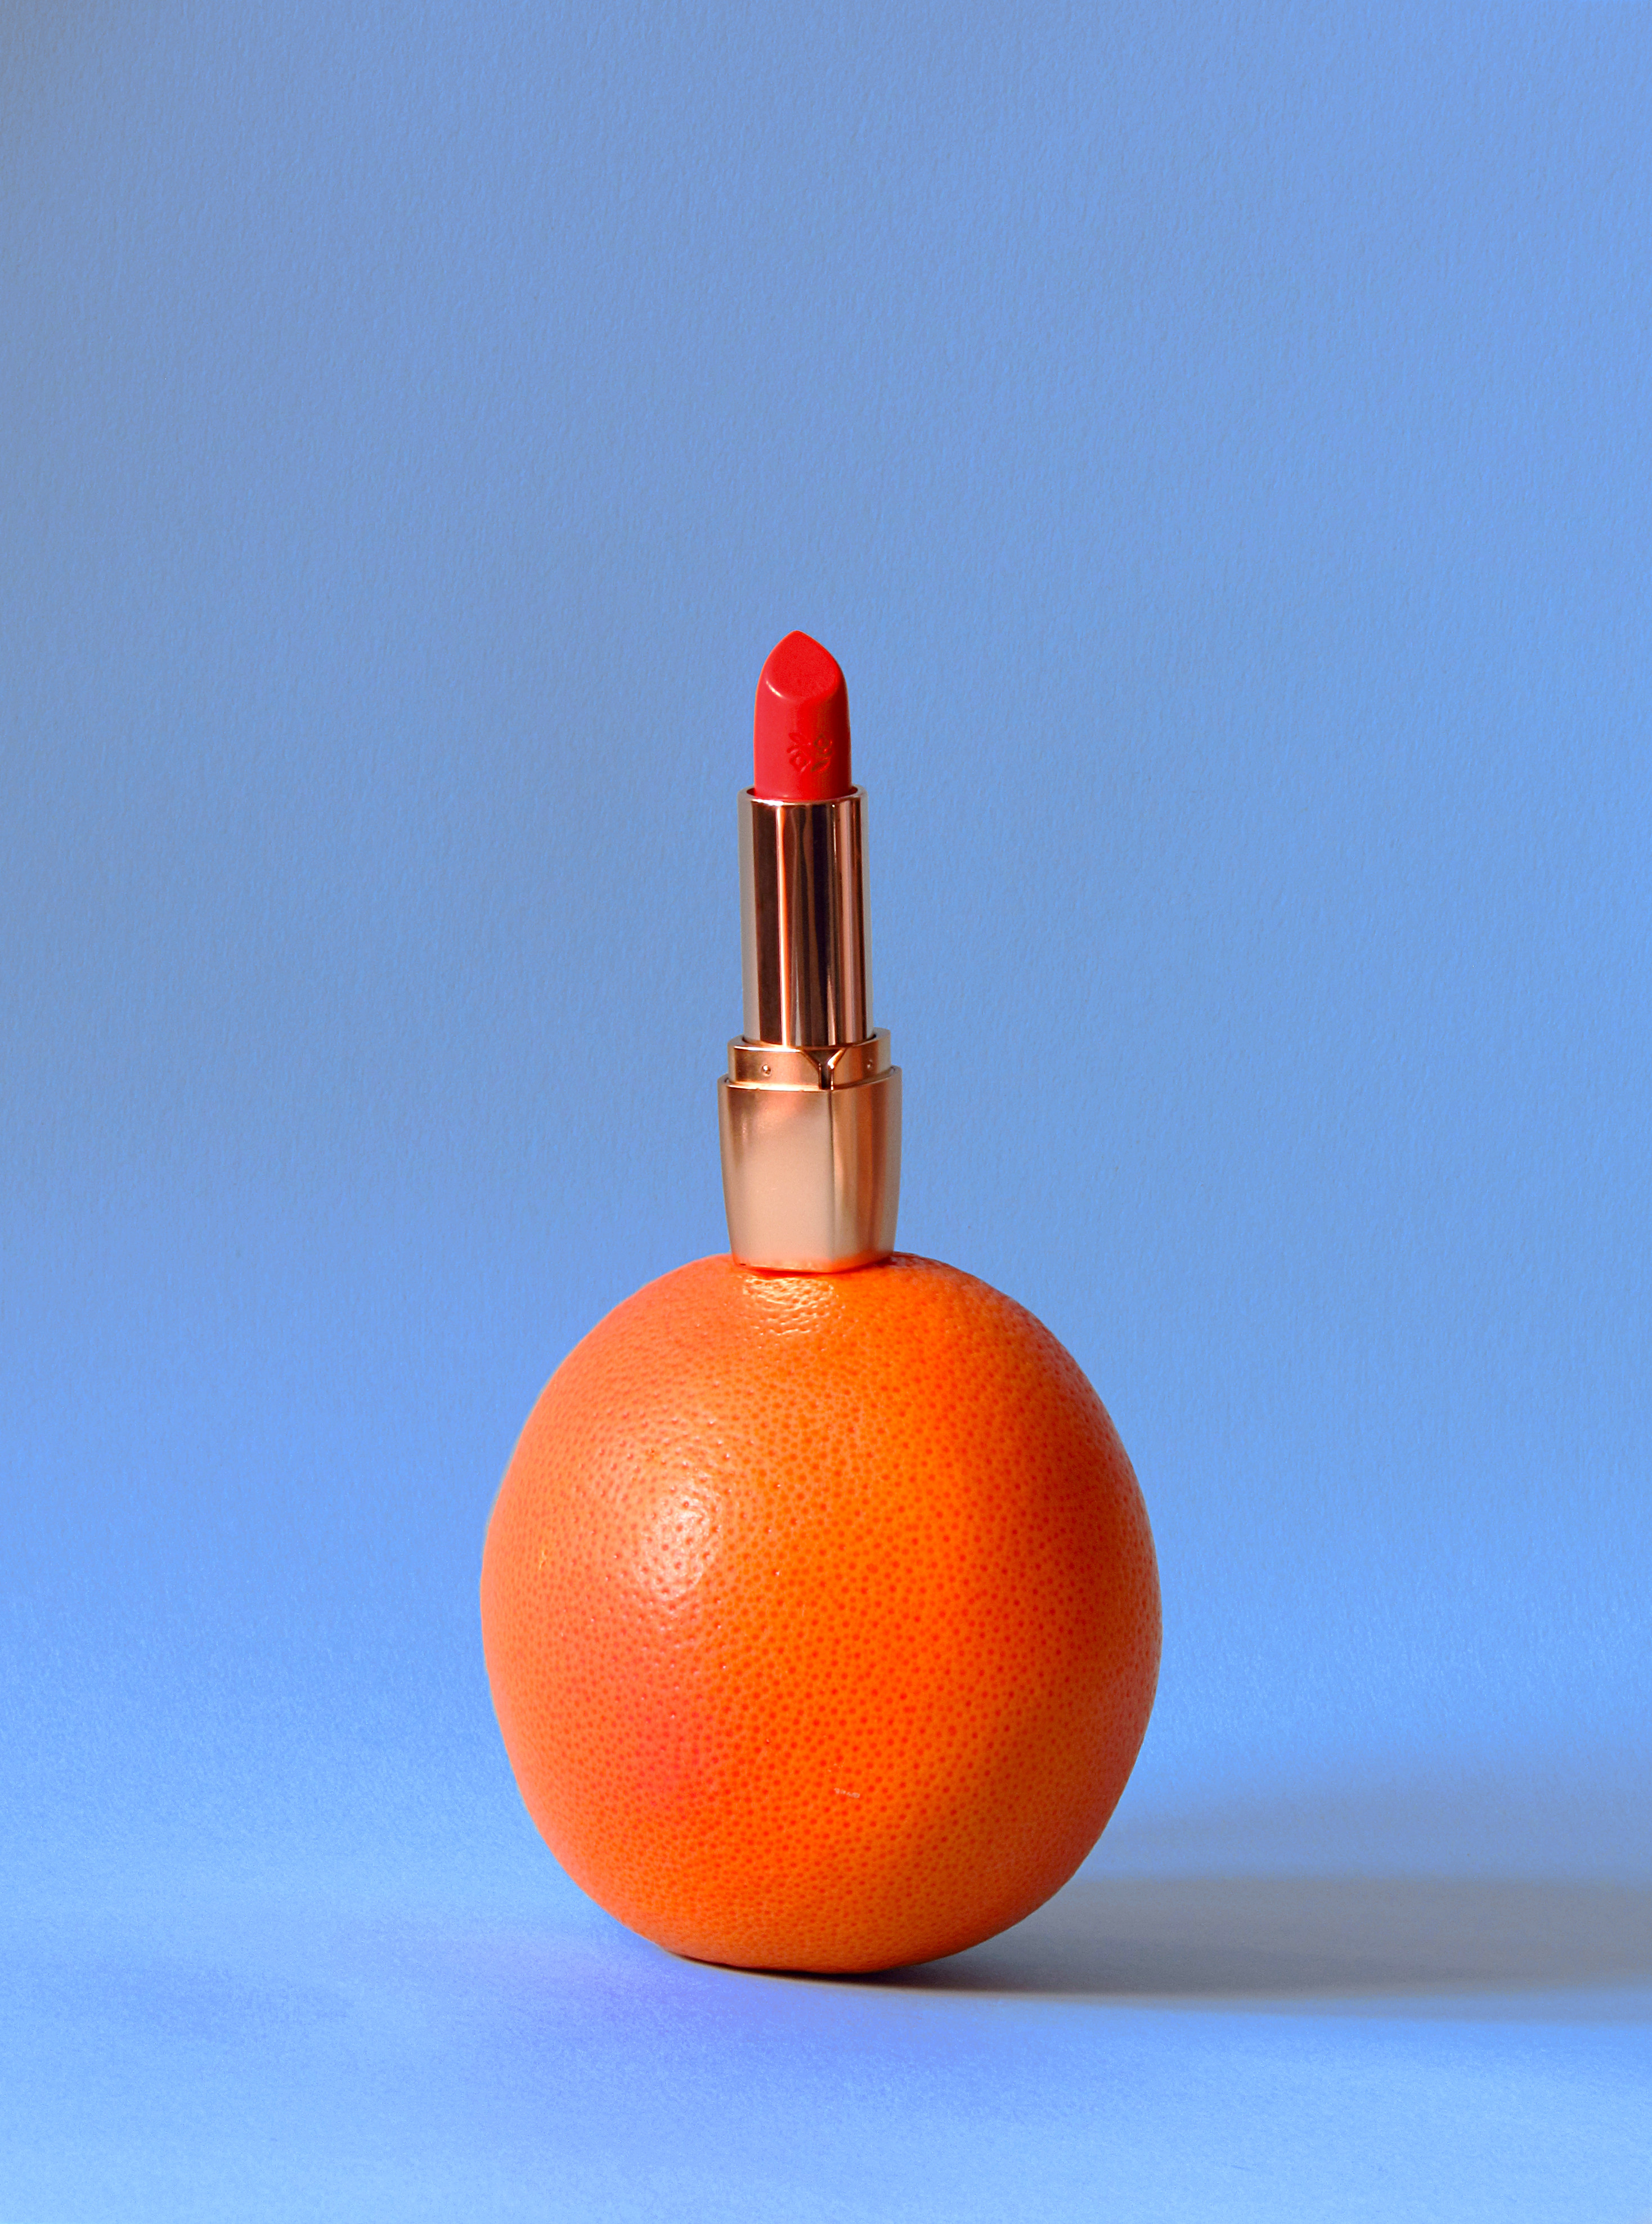 Deborah Milano Rossetto Milano Red Lipstick in No. 11 standing on a grapefruit for color comparison.